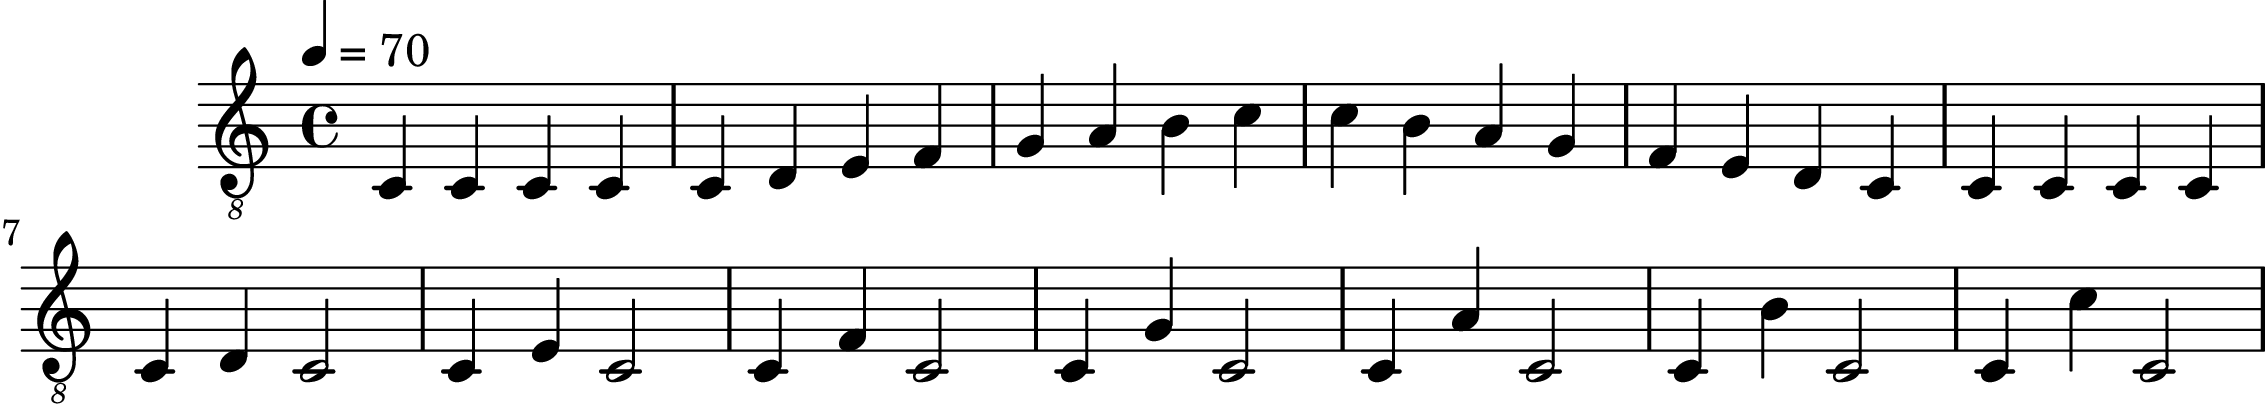 \version "2.20.0"

symbols =  {
  \time 4/4
  \tempo 4 = 70

  c4 c c c
 
  c4 d e f
  g4 a b c'

  c'4 b a g
  f4 e d c

  c4 c c c

  c4 d c2
  c4 e c2
  c4 f c2
  c4 g c2
  c4 a c2
  c4 b c2
  c4 c' c2
}

\score {
  <<
    \new Staff \with {midiInstrument = "acoustic guitar (nylon)"} {
      \clef "G_8"
      \symbols
    }
  >>

  \midi { }
  \layout { }
}